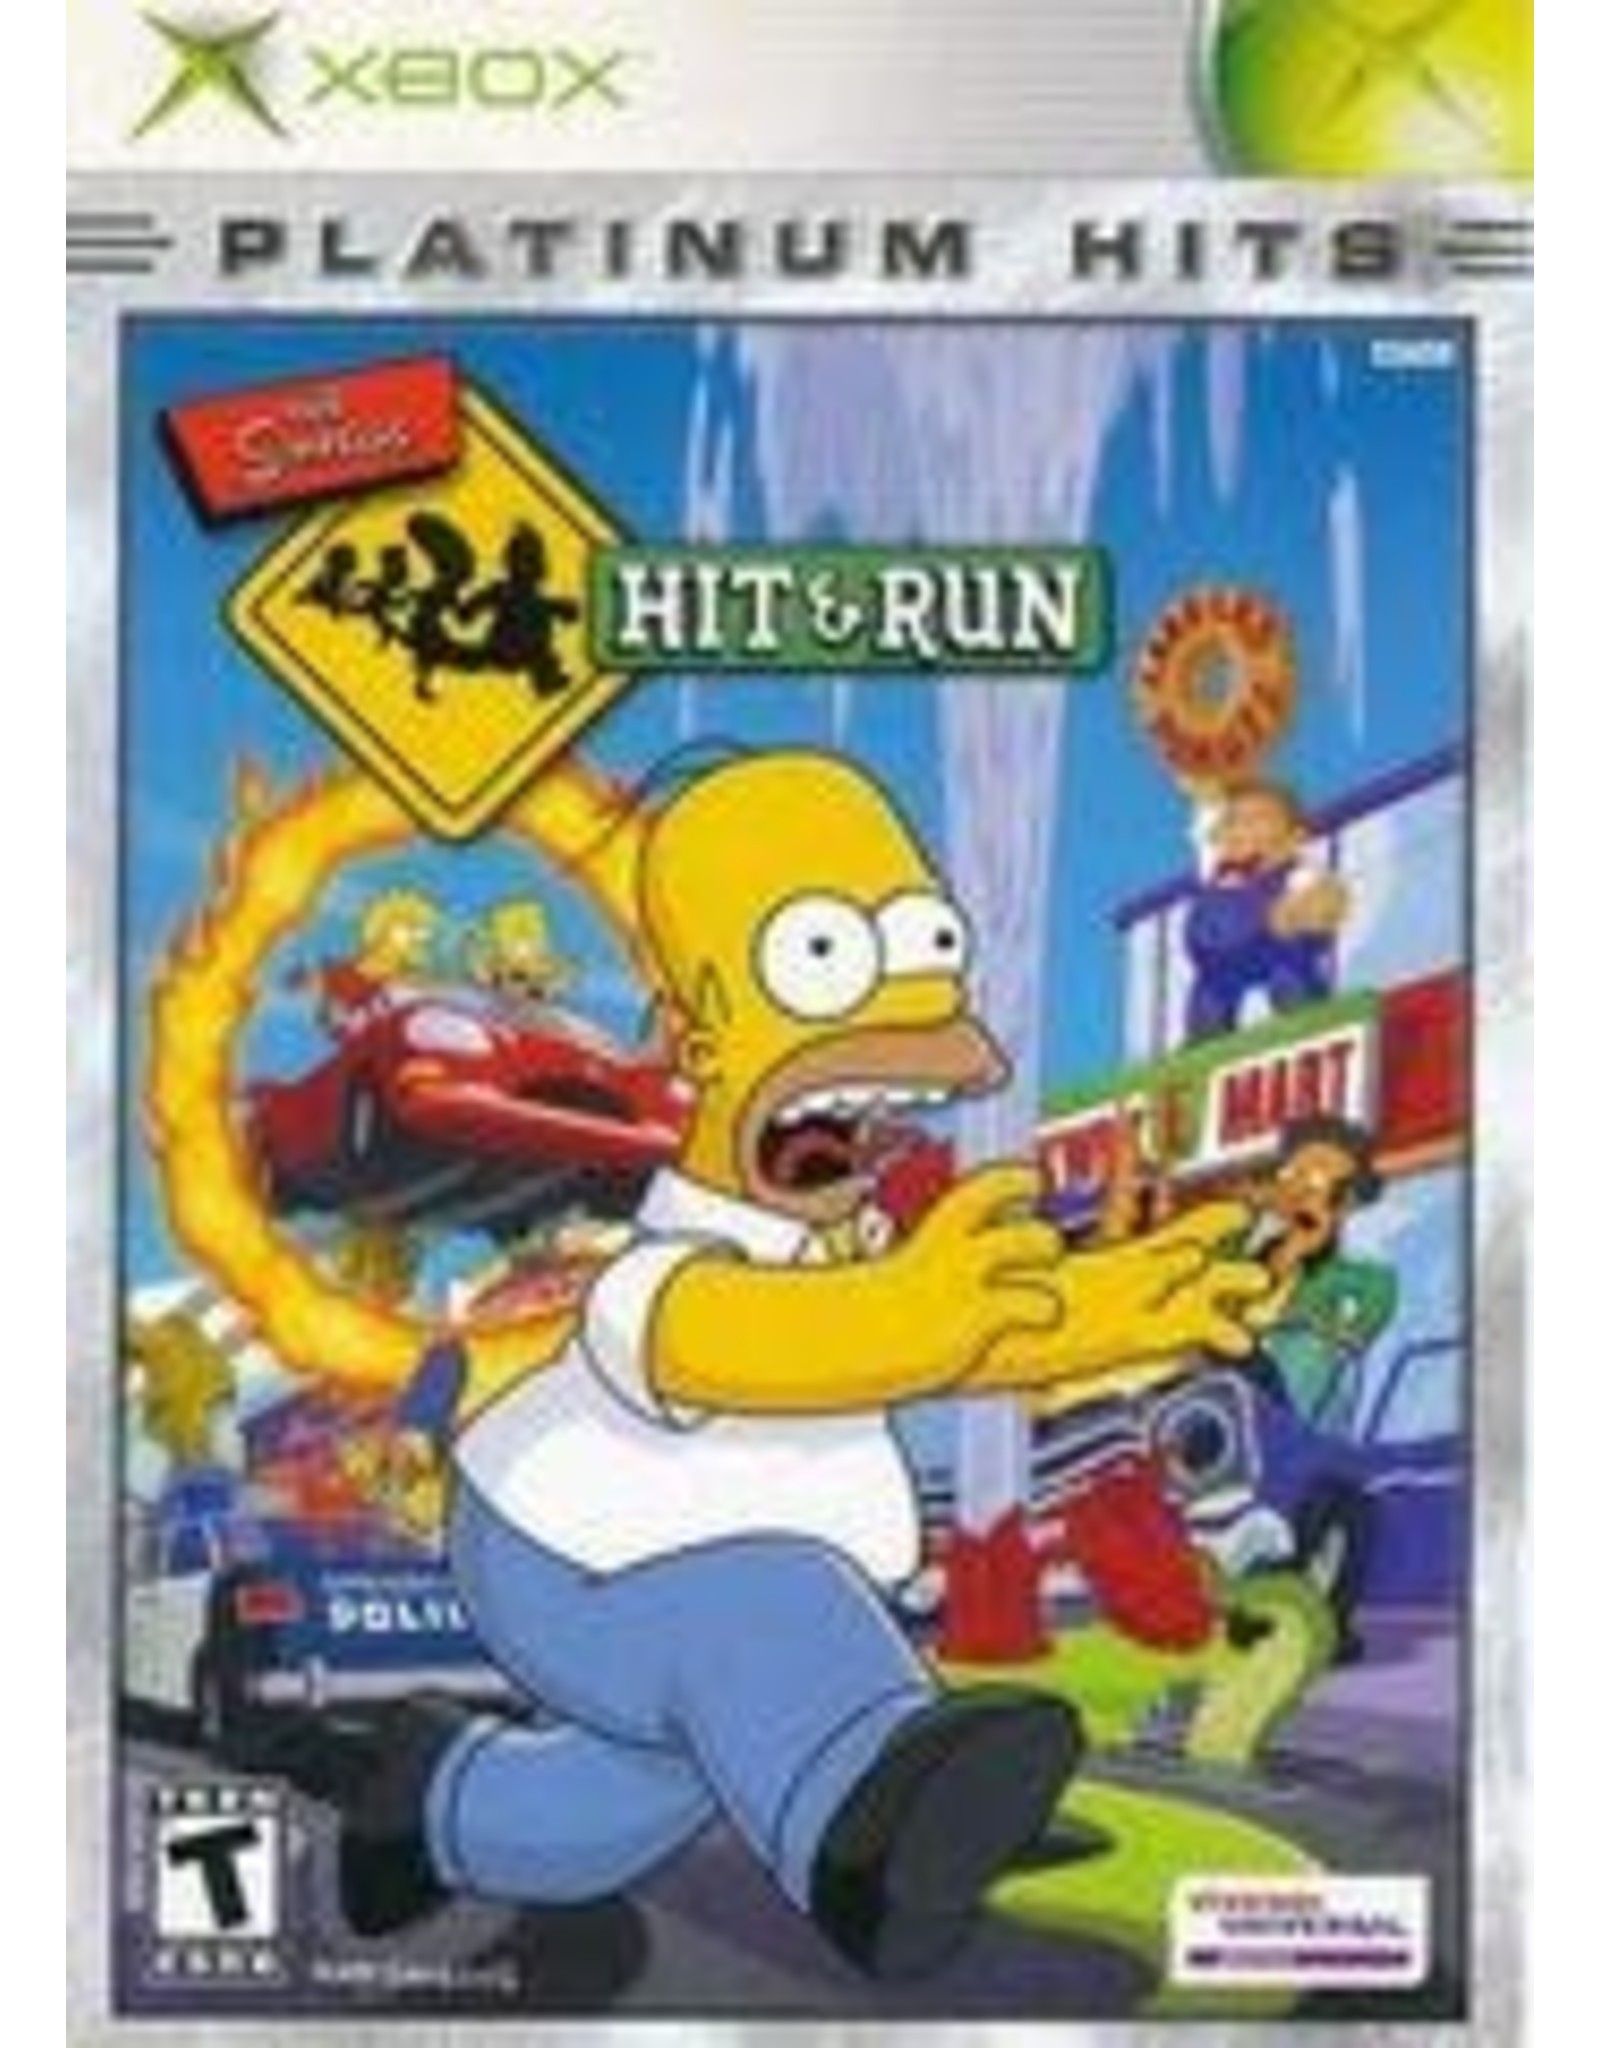 Xbox Simpsons Hit and Run, The (Platinum Hits, Brand New)